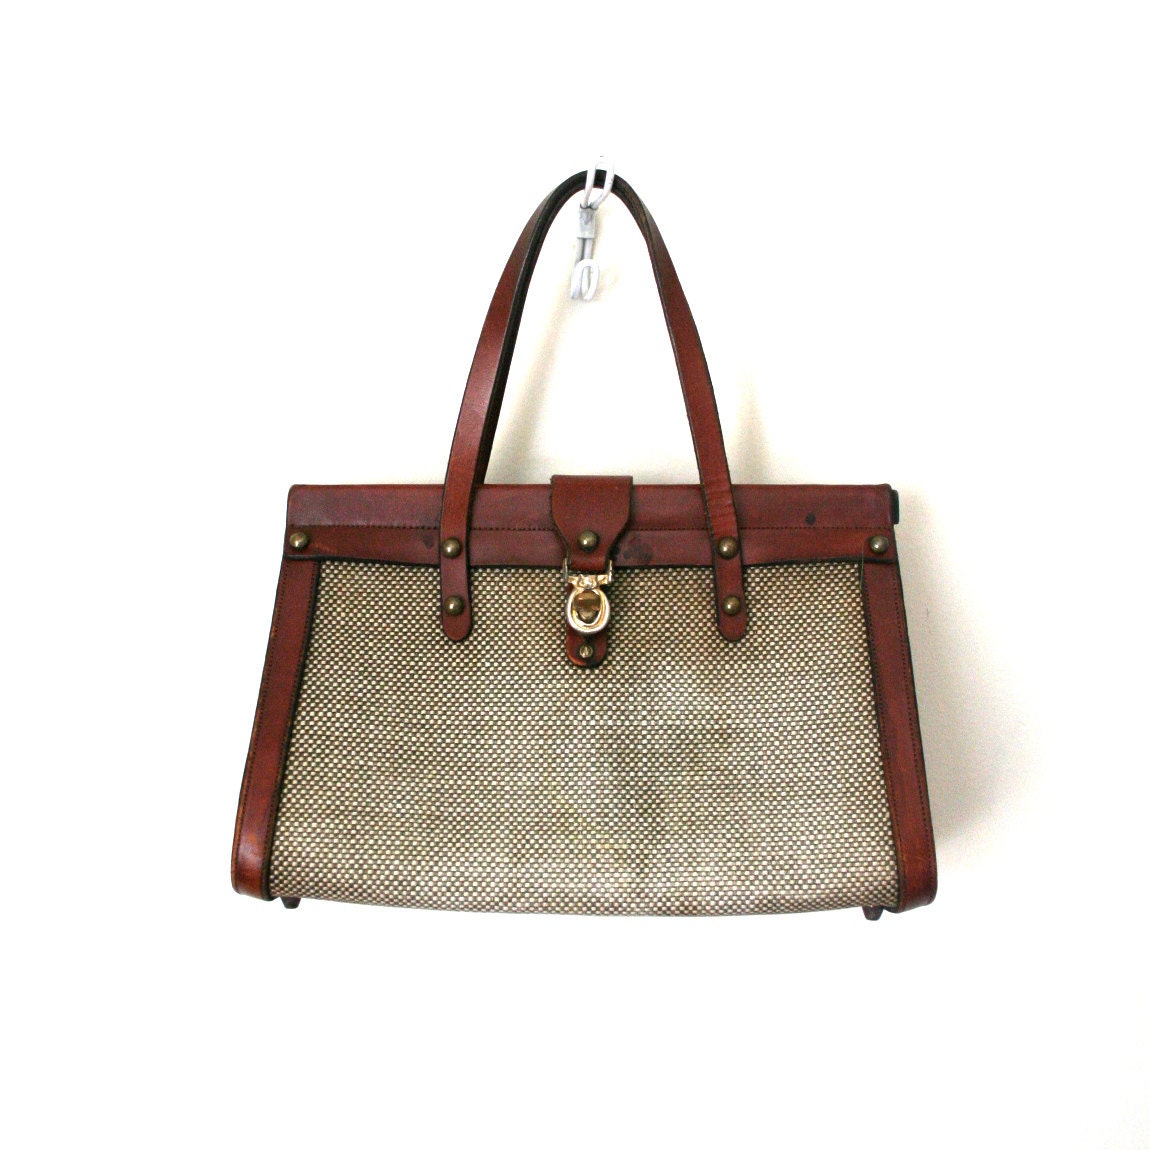 vintage handbag / purse JOHN ROMAIN imperfect TWEED by AgeofMint